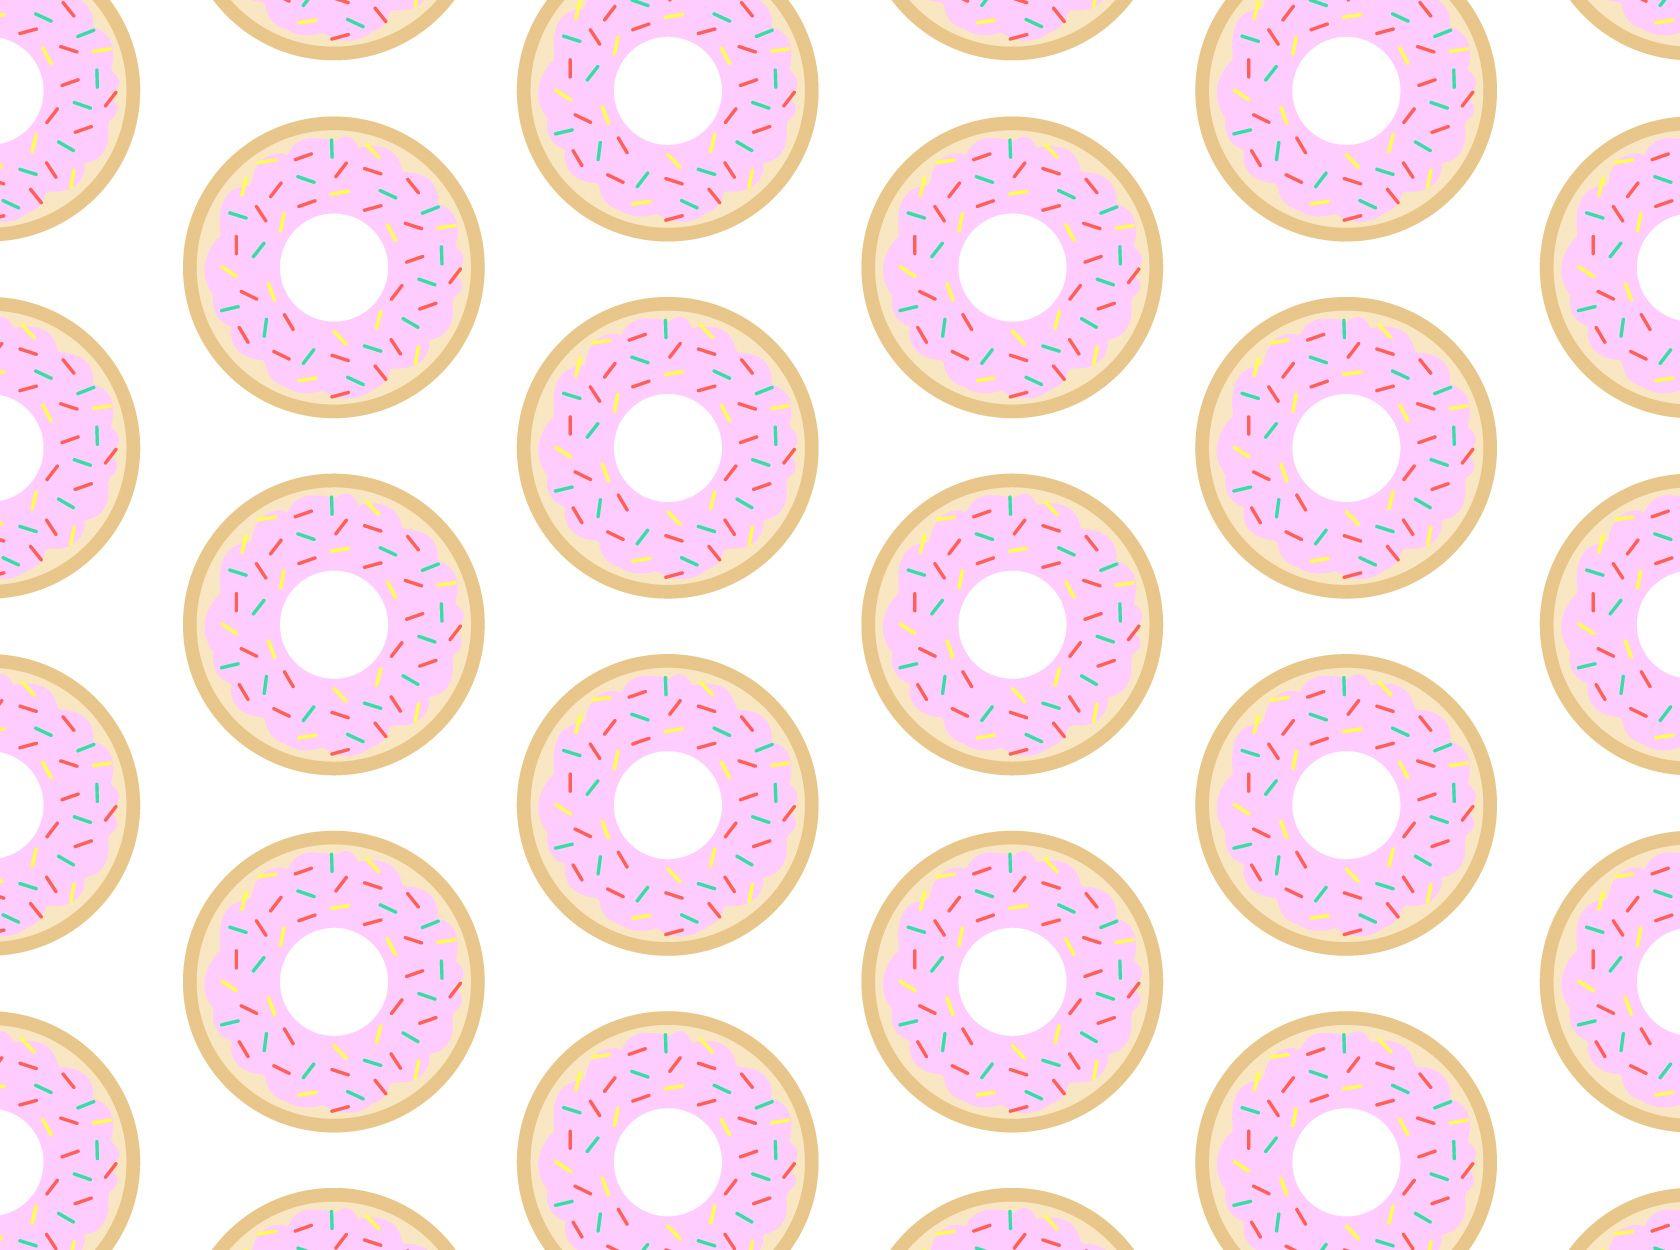 Donut Wallpaper Image Gallery